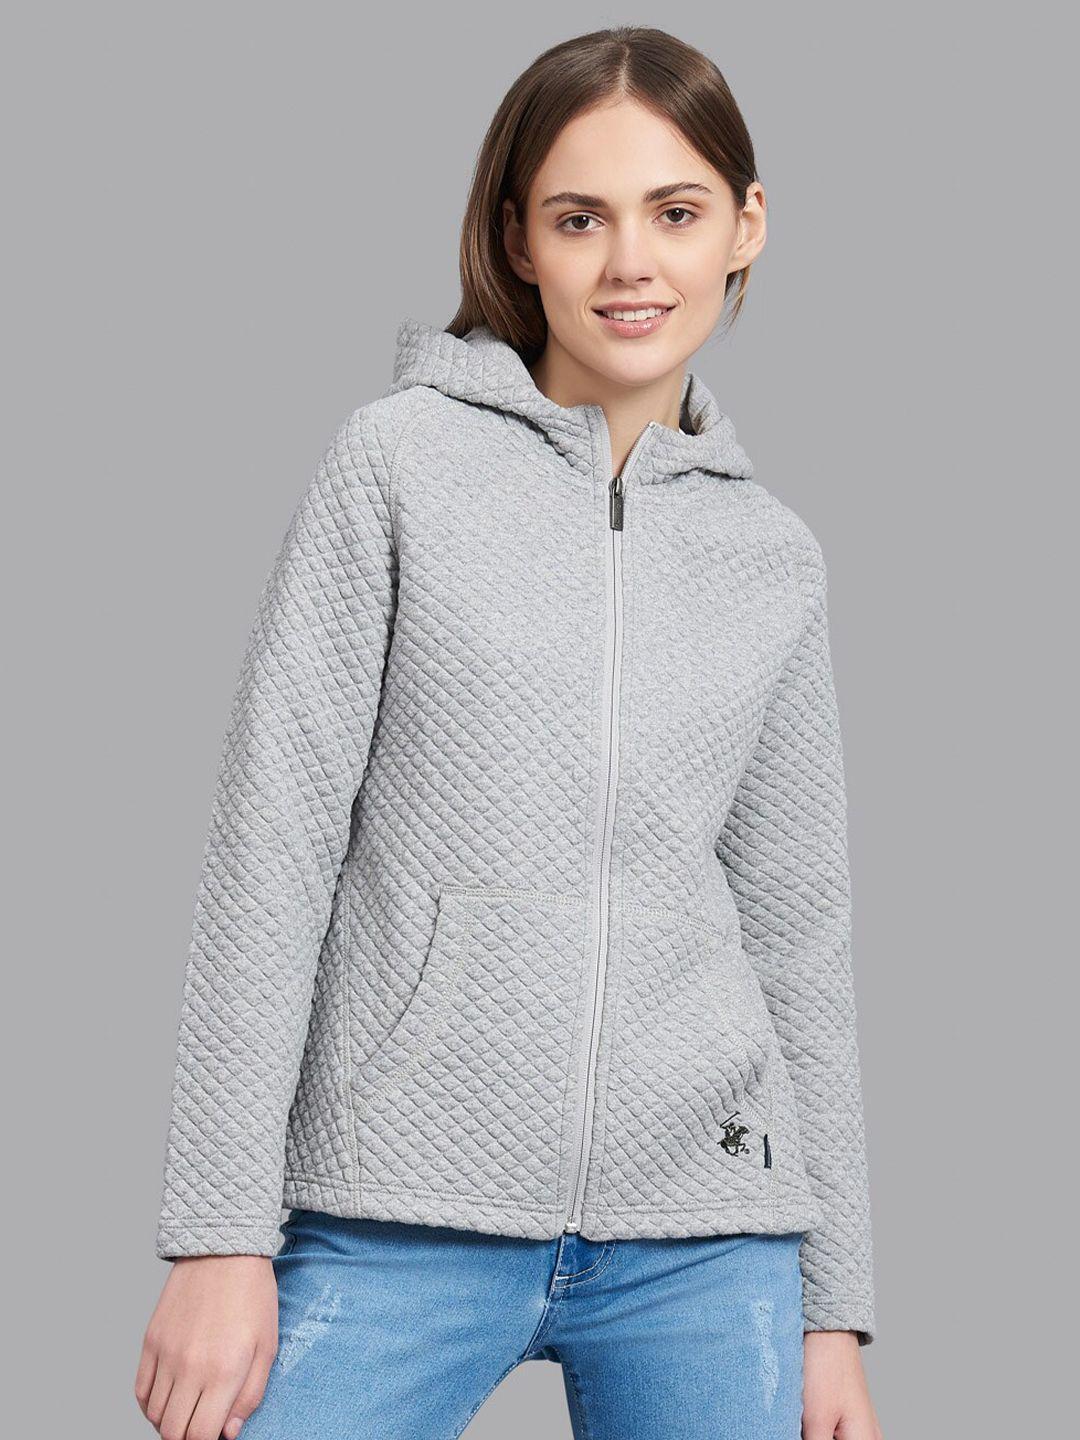 beverly-hills-polo-club-women-grey-hooded-sweatshirt